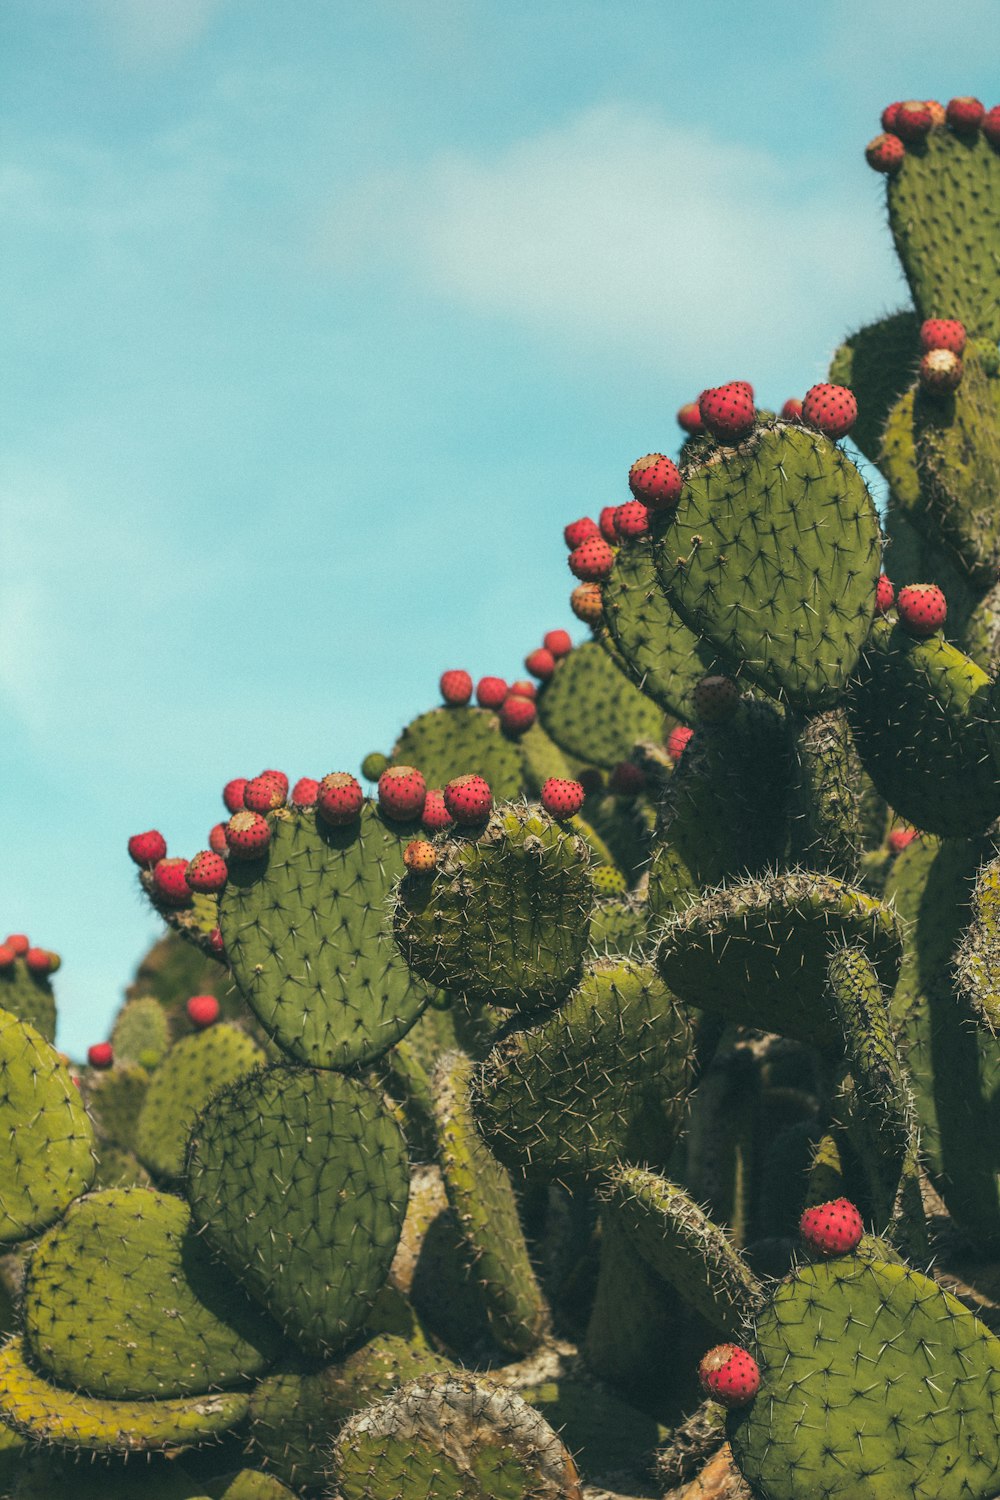 Un groupe de cactus